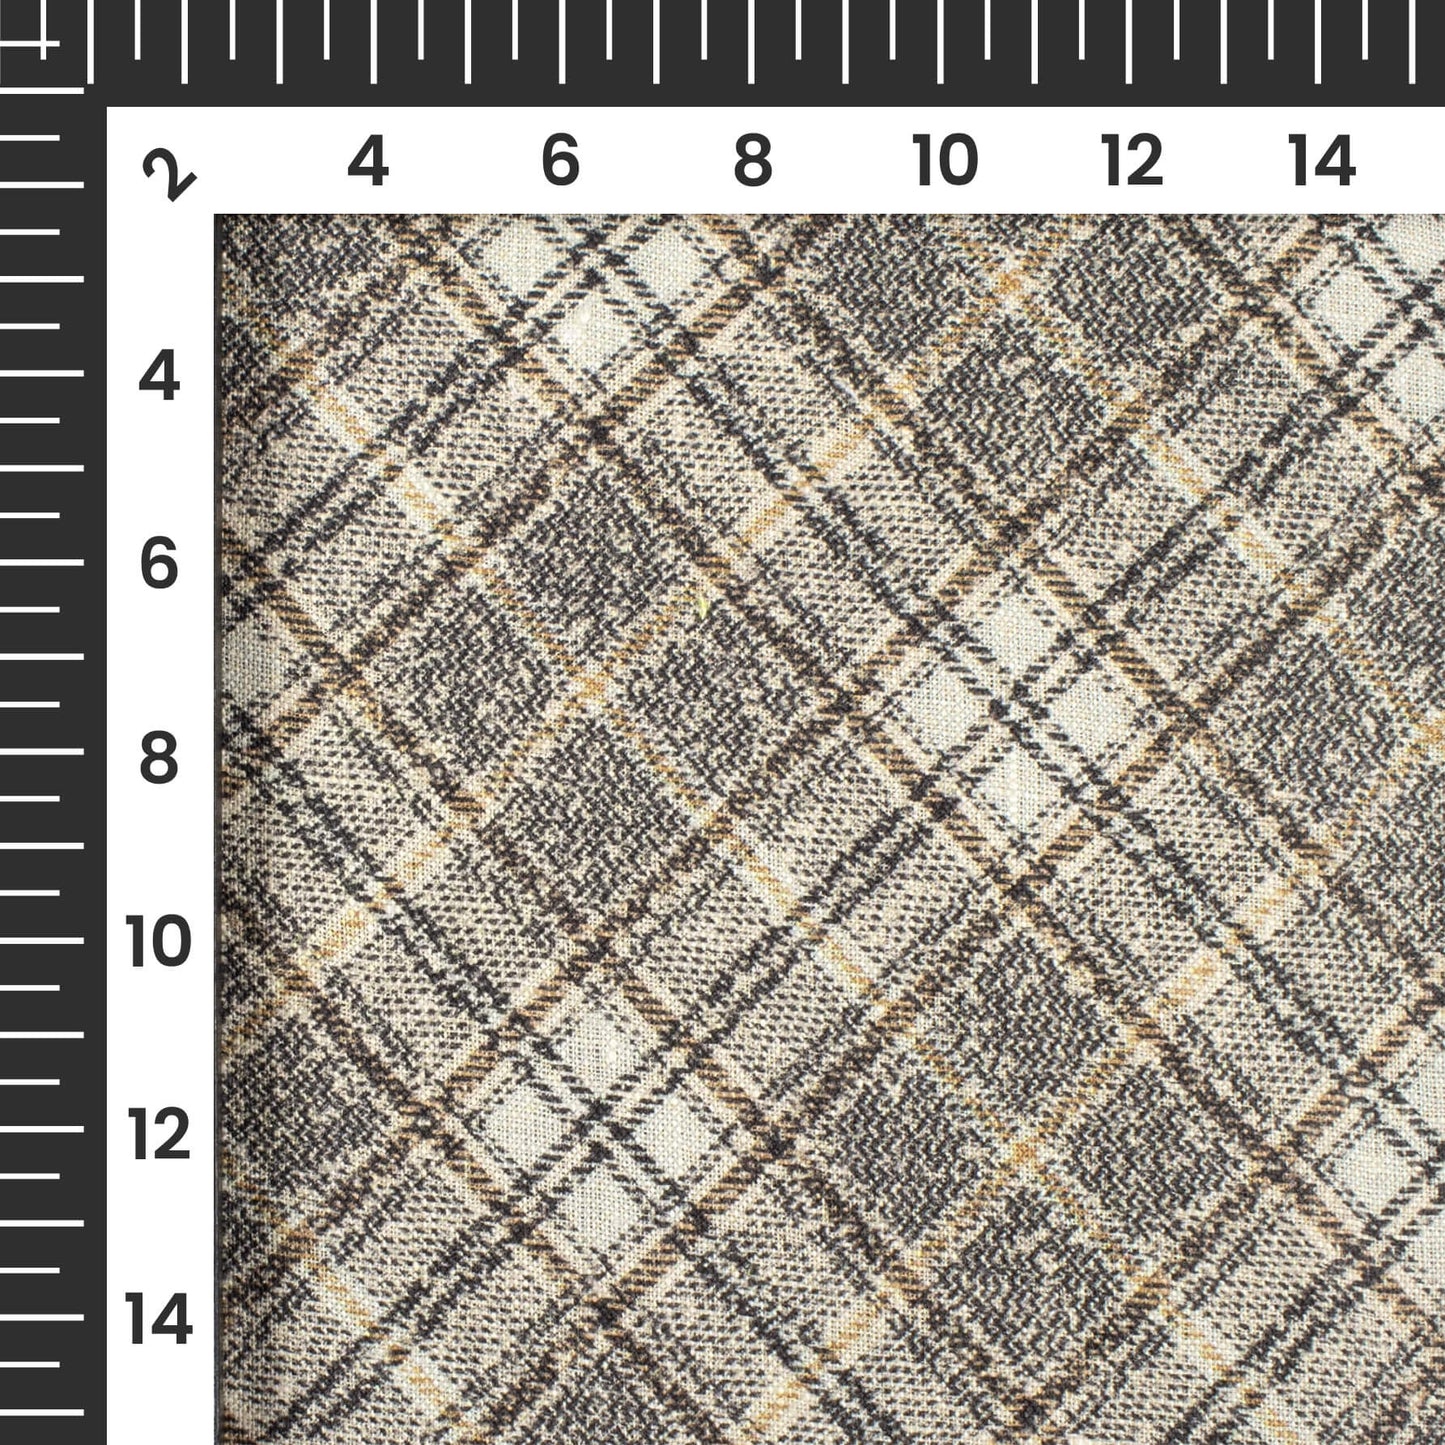 Off White And Black Checks Pattern Digital Print Premium Swiss Linen Fabric